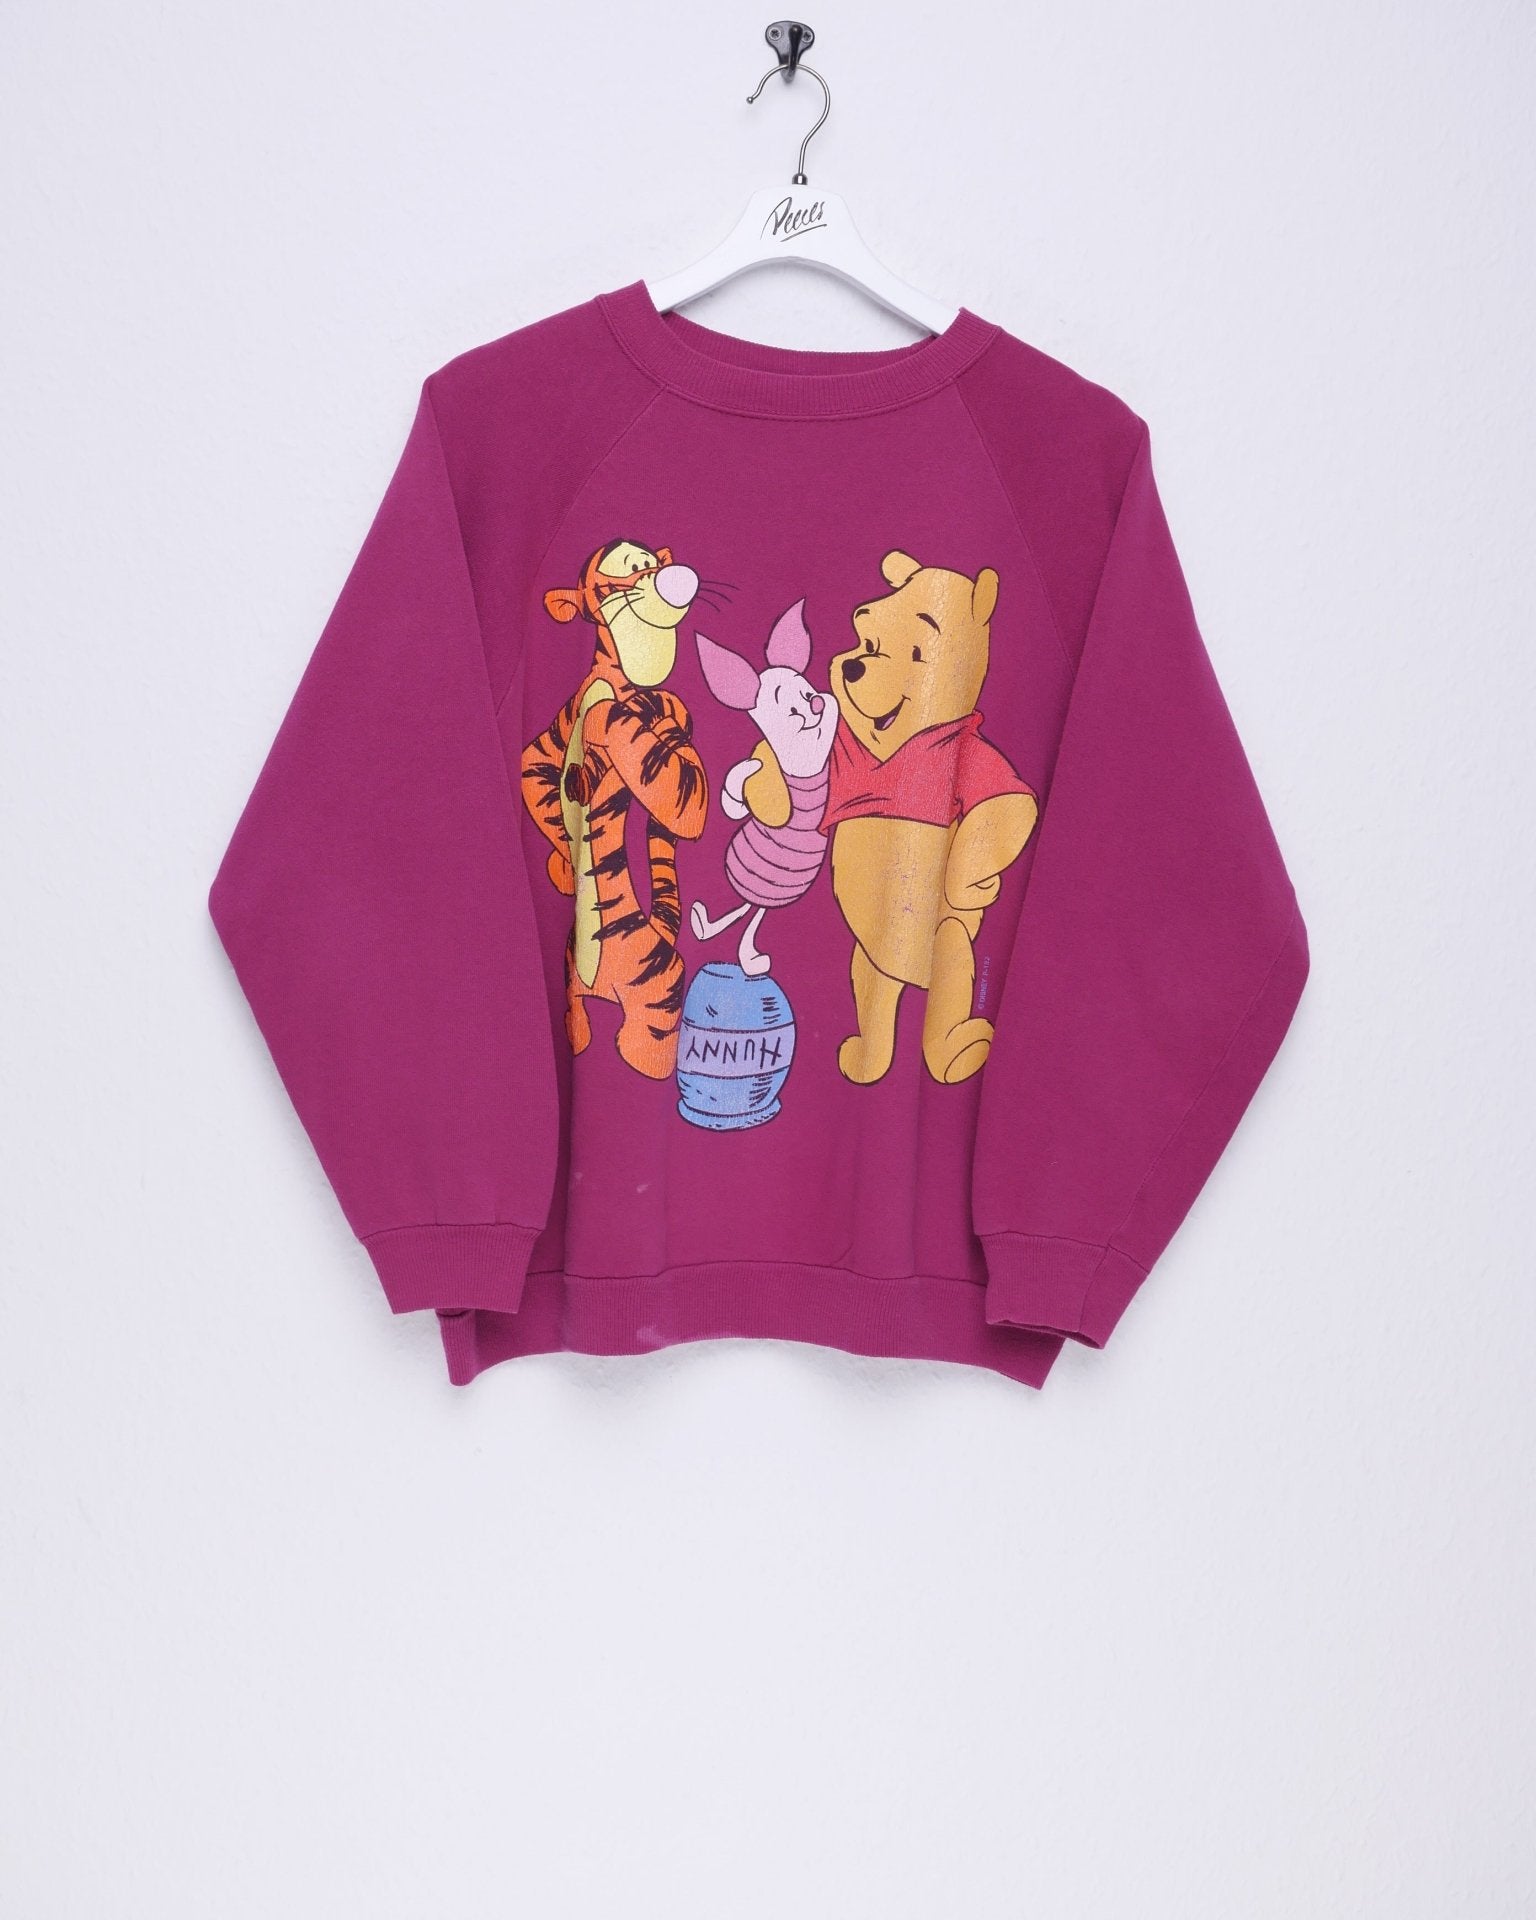 Disney 'Pooh' printed Graphic purple Sweater - Peeces